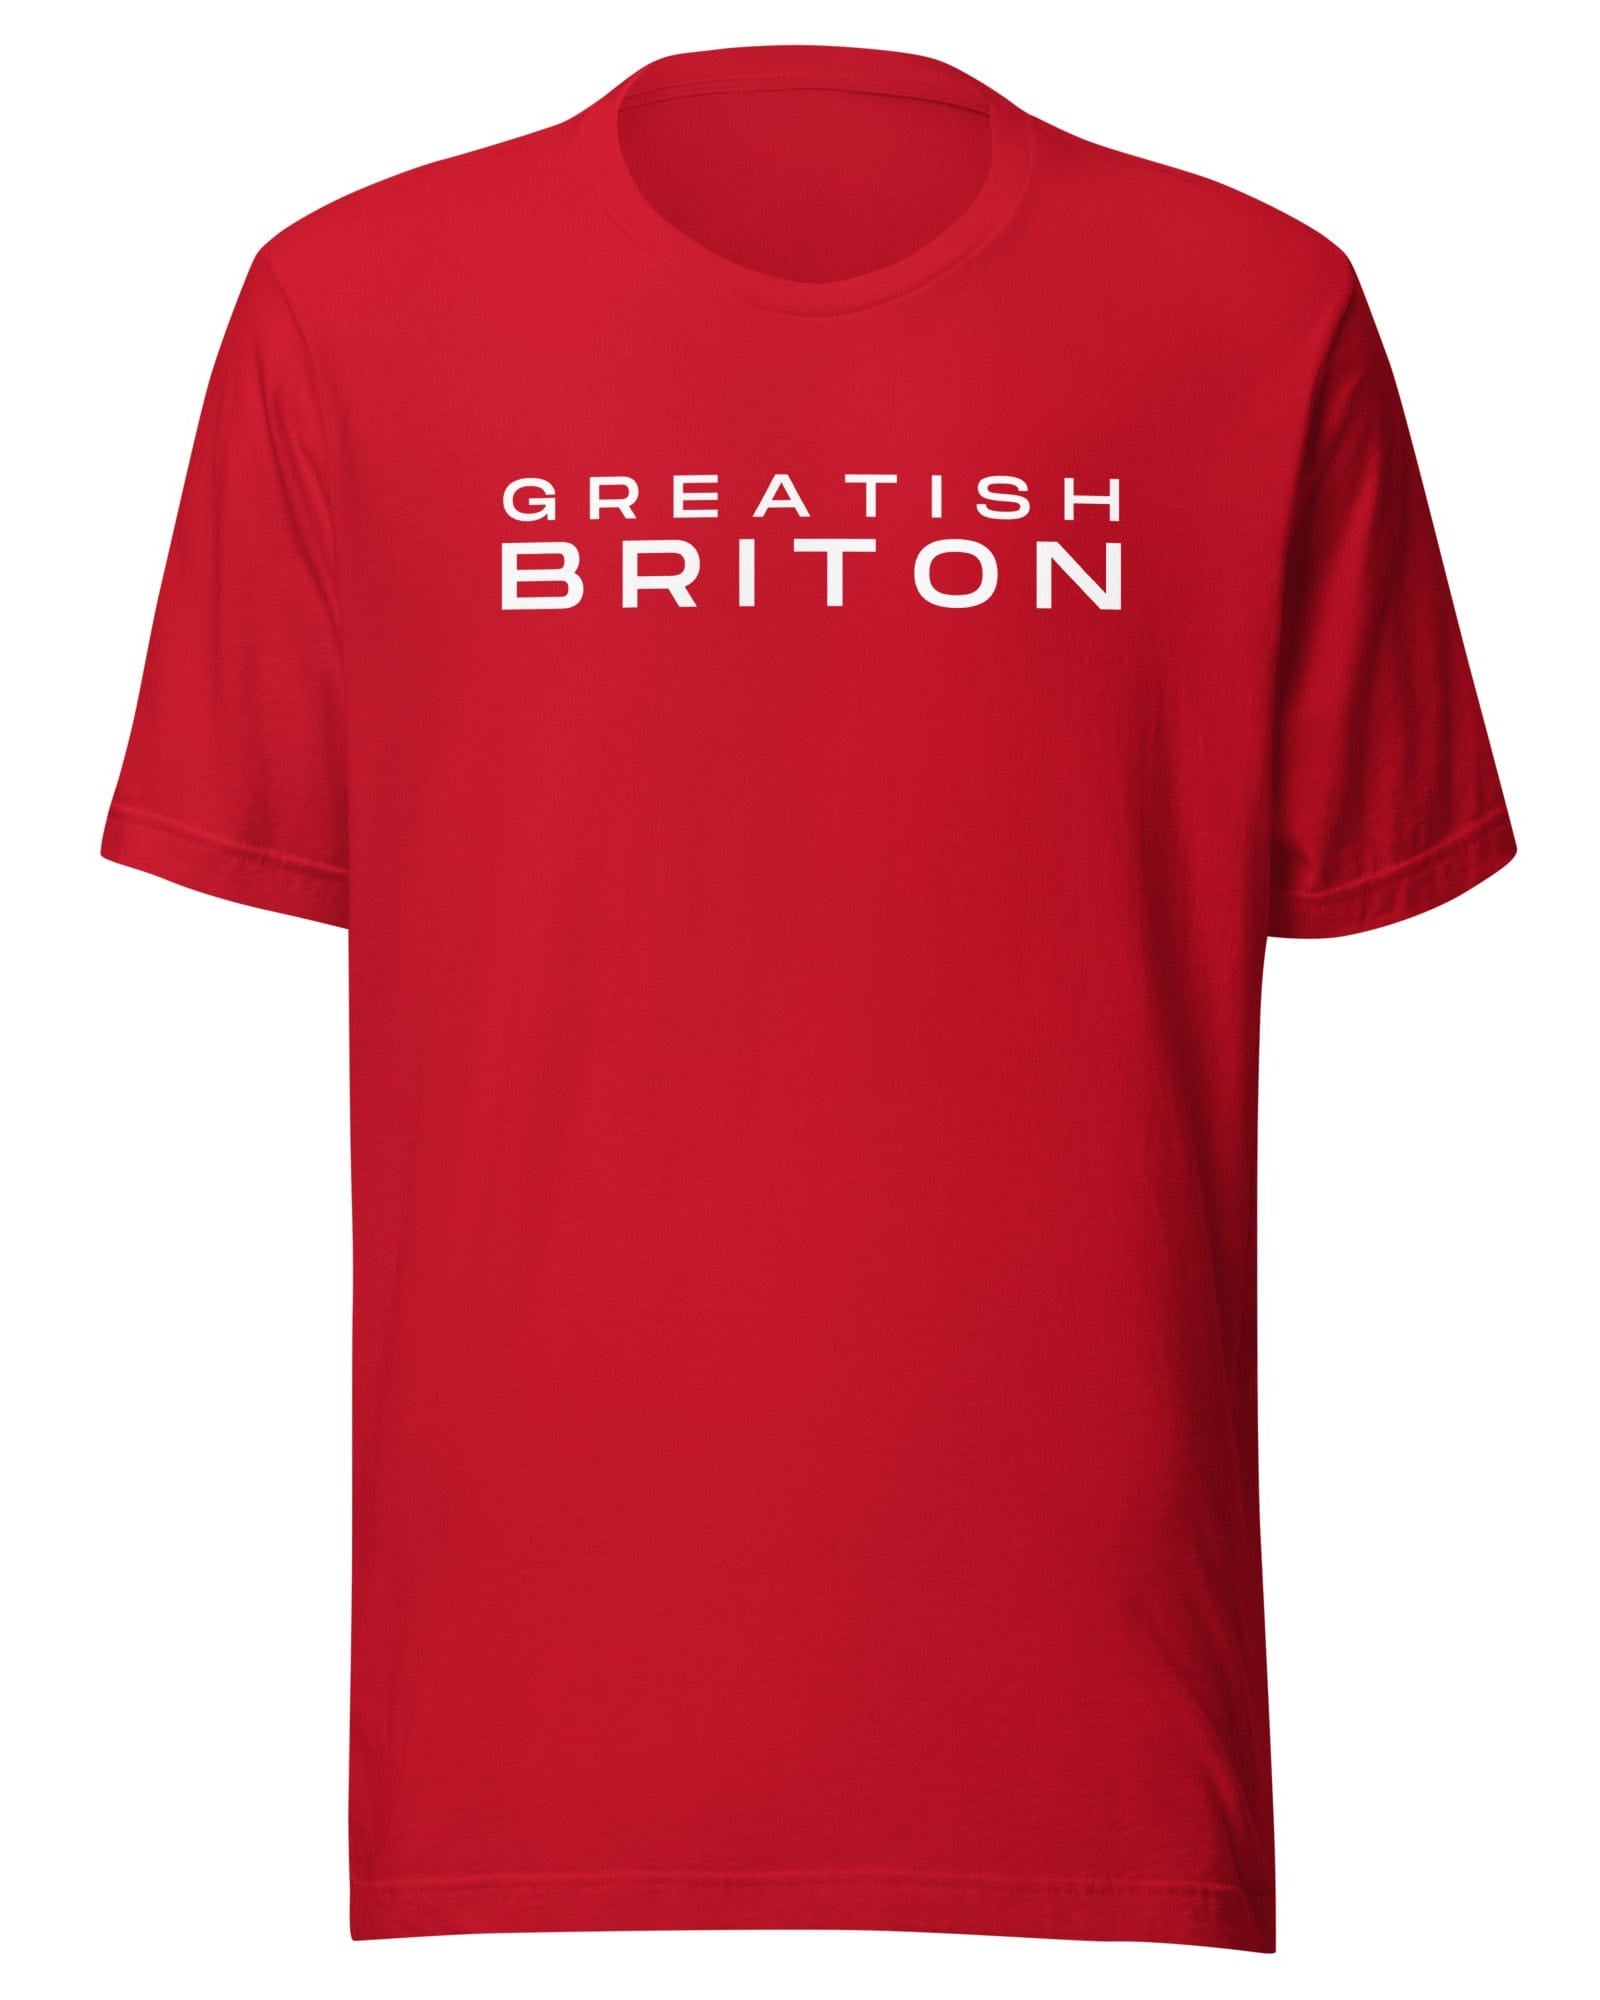 Greatish Briton T-shirt Red / S Shirts & Tops Jolly & Goode